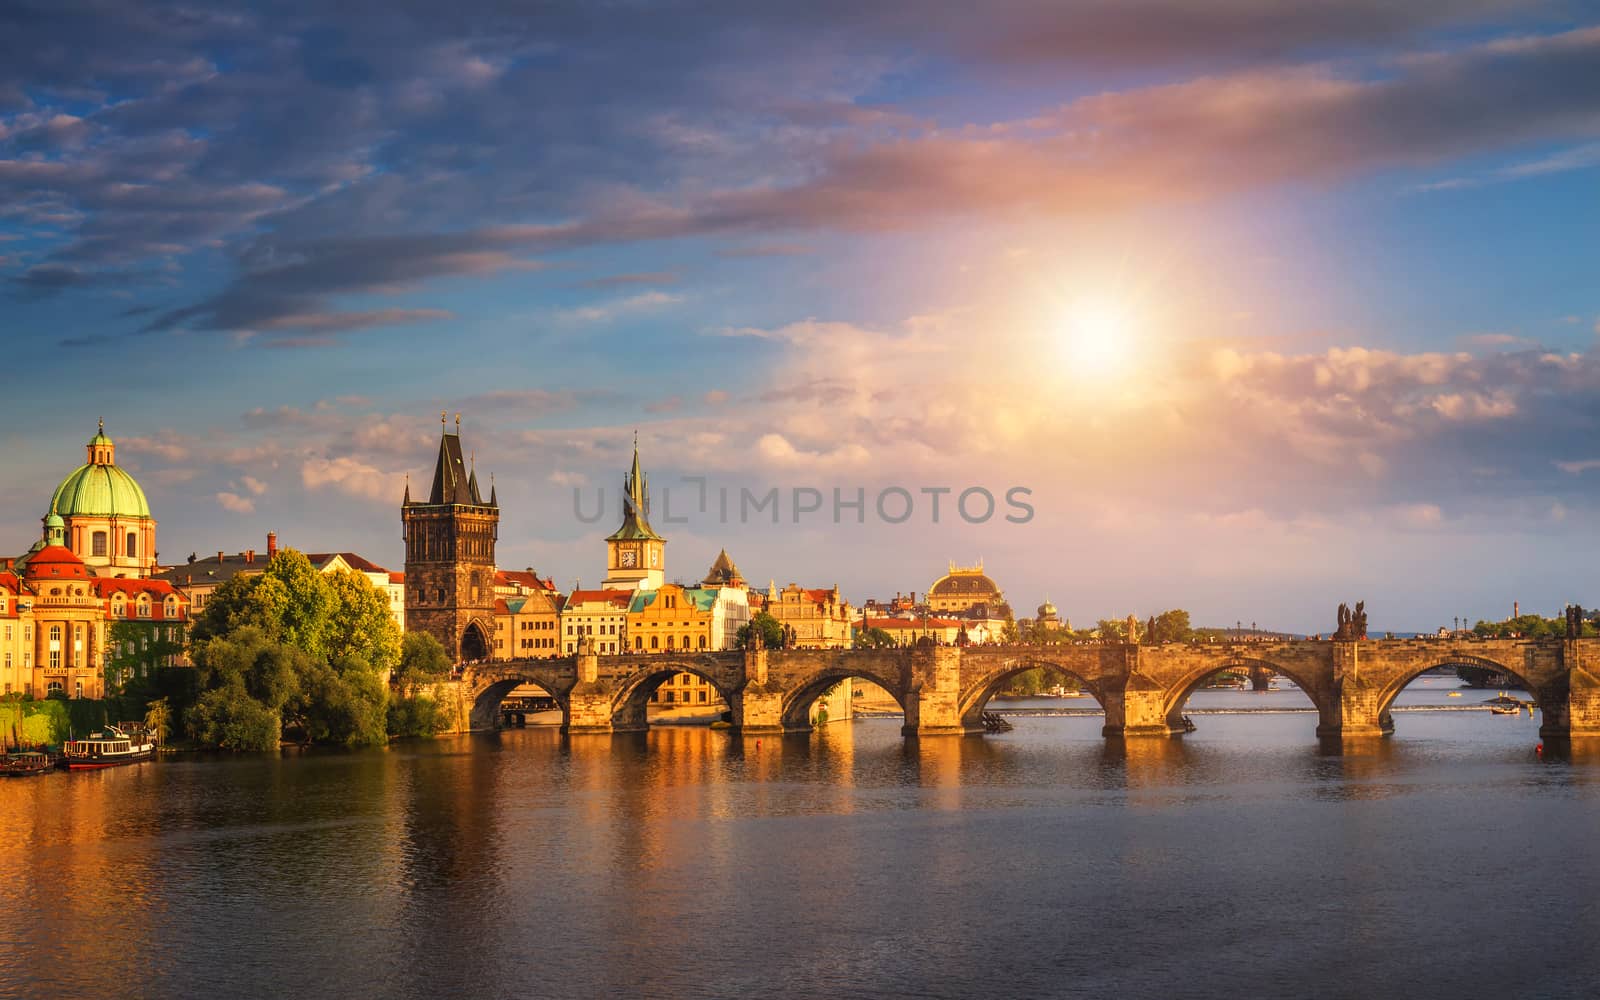 Prague, Czech Republic panorama with historic Charles Bridge and Vltava river on sunny day.